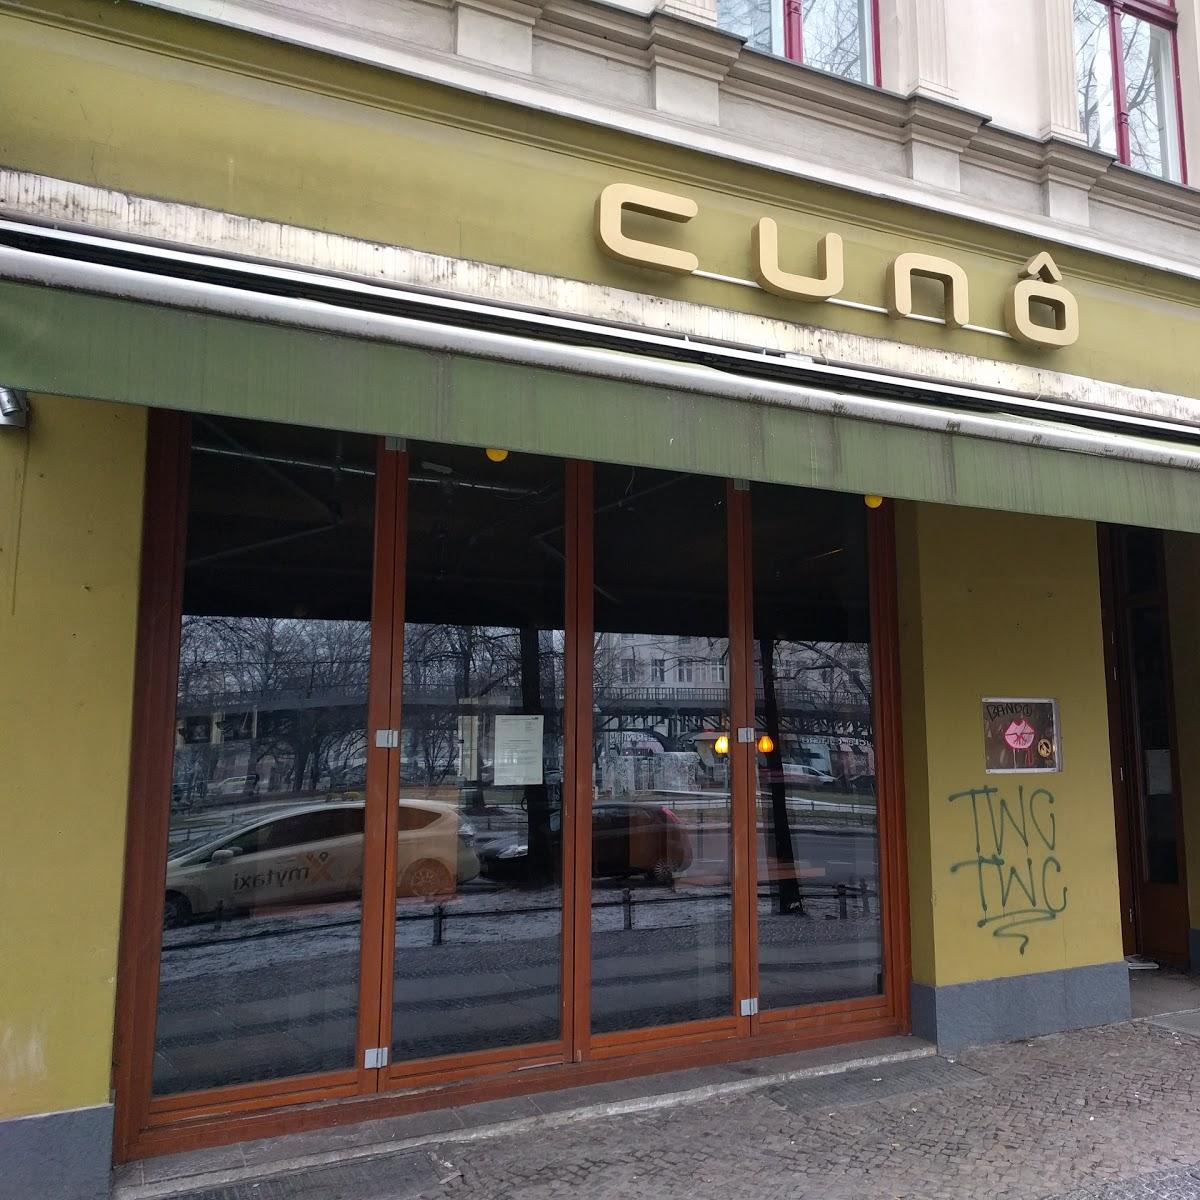 Restaurant "Restaurant Cuno" in Berlin